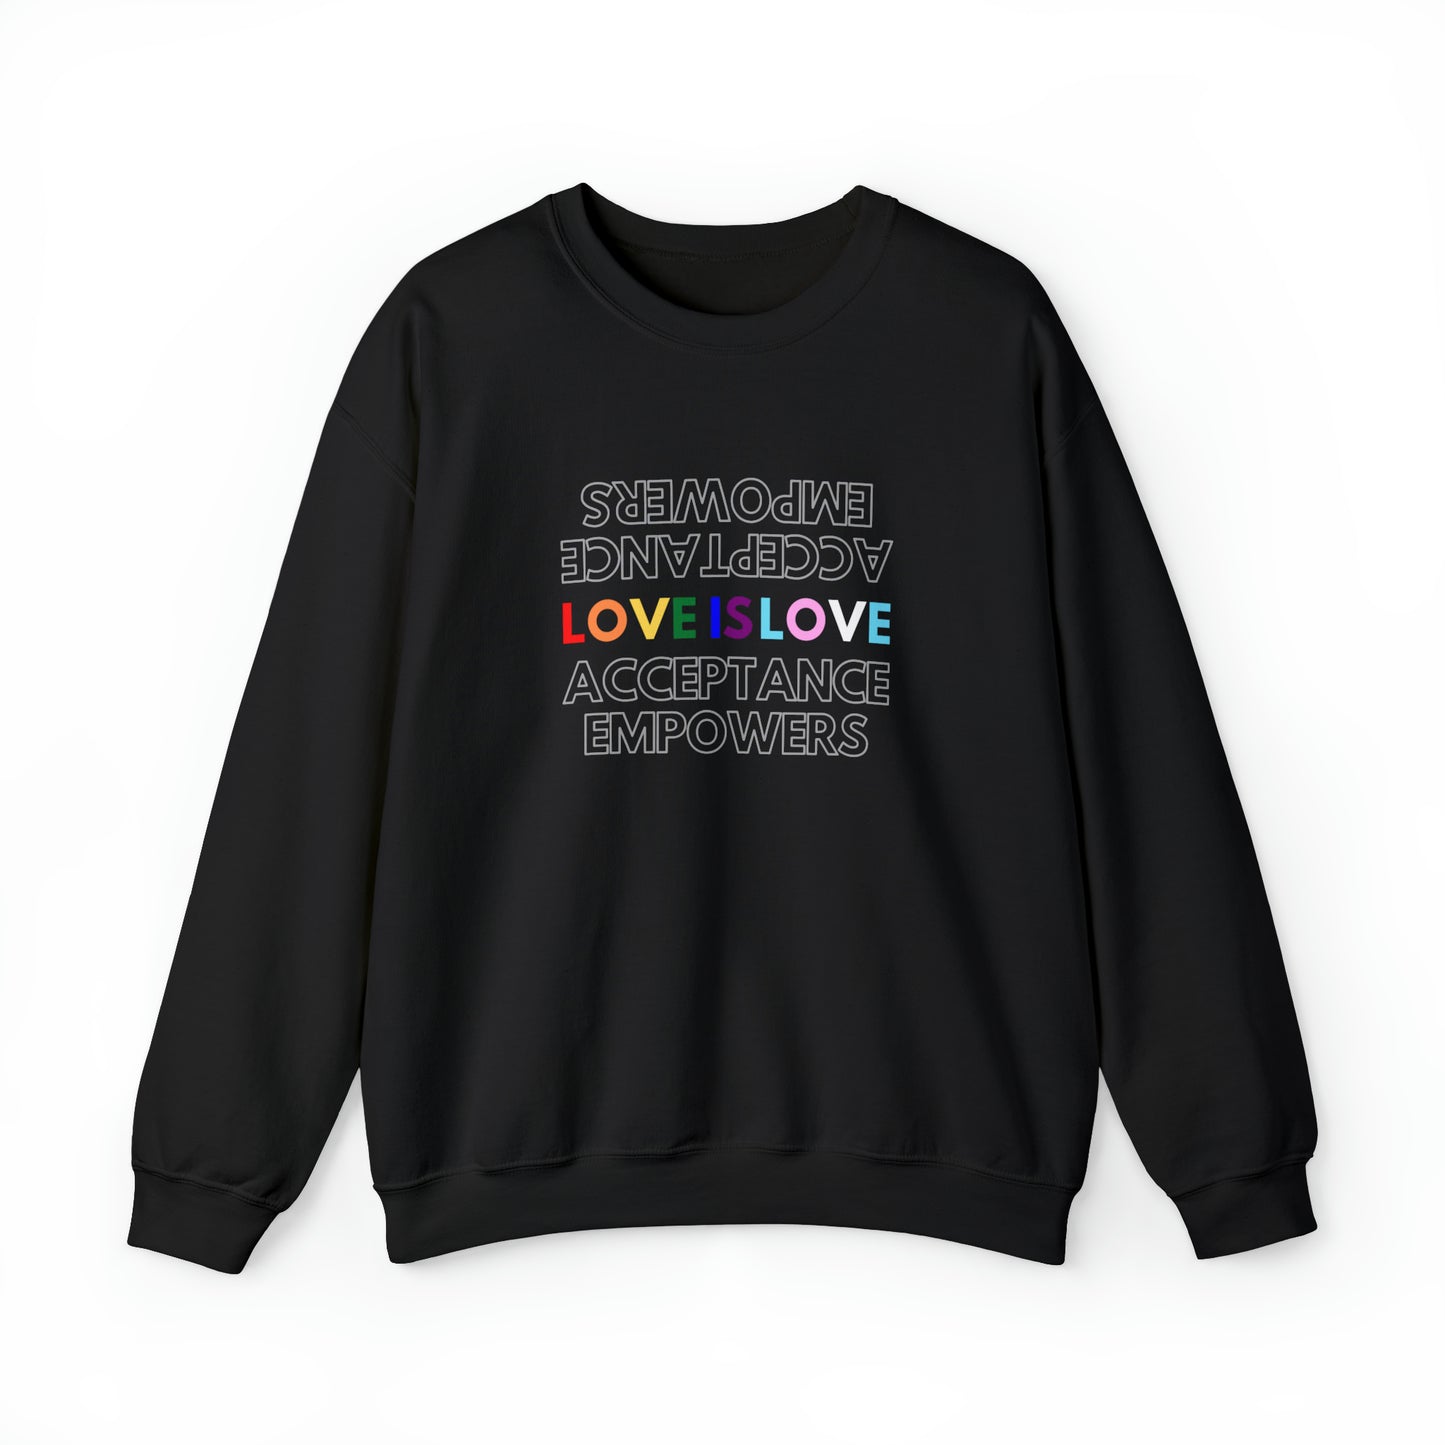 Love is Love, Acceptance Empowers Sweatshirts